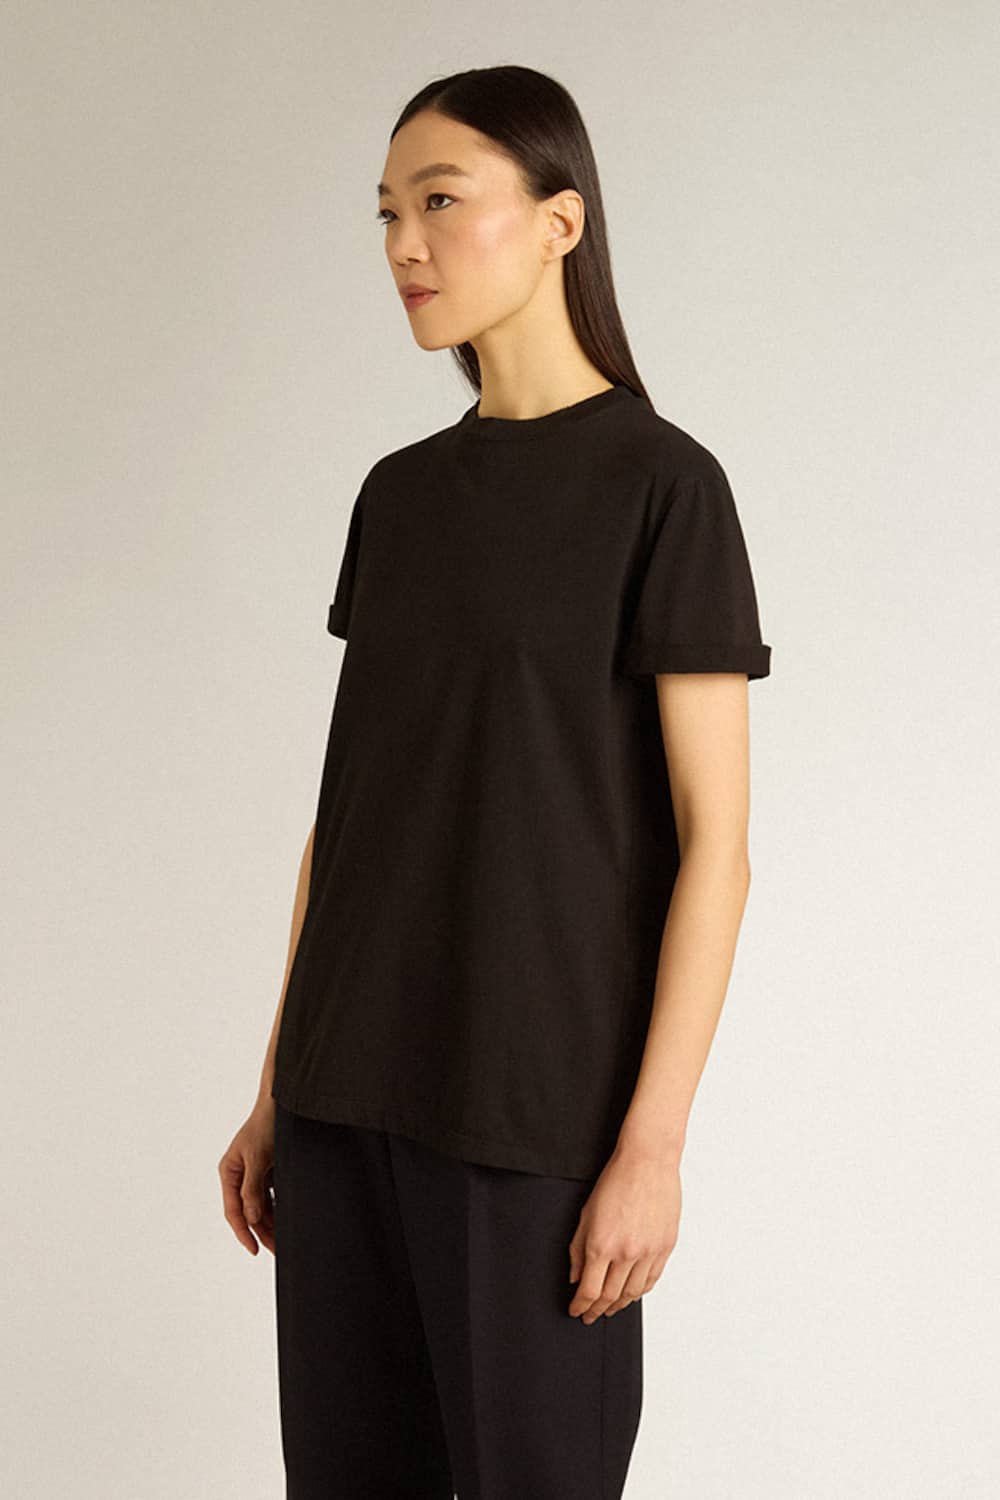 Golden Goose - Women’s regular-fit distressed T-shirt in black in 